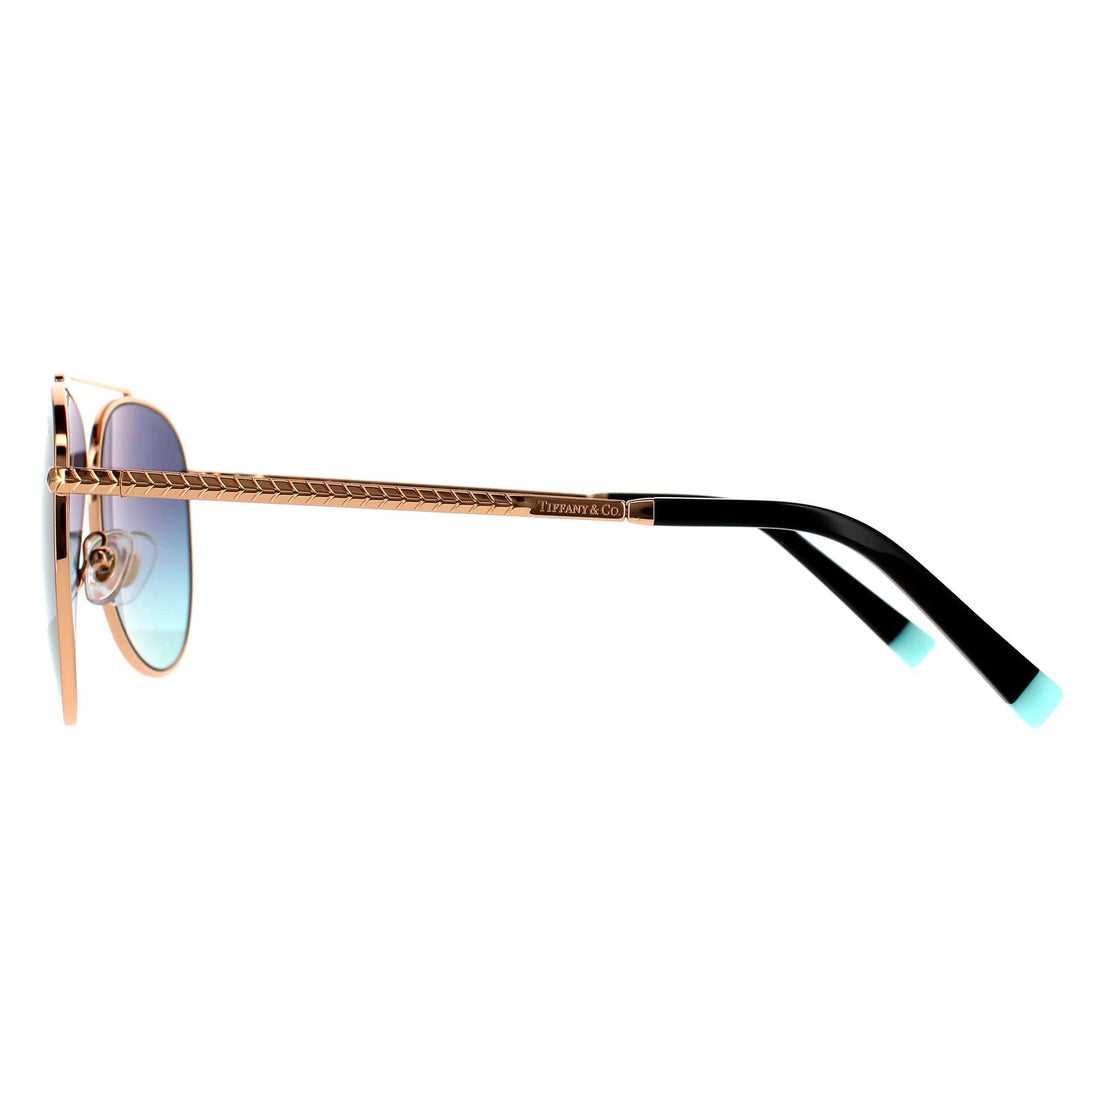 Tiffany Sunglasses TF3074 61059S Rubedo Blue Azure Gradient